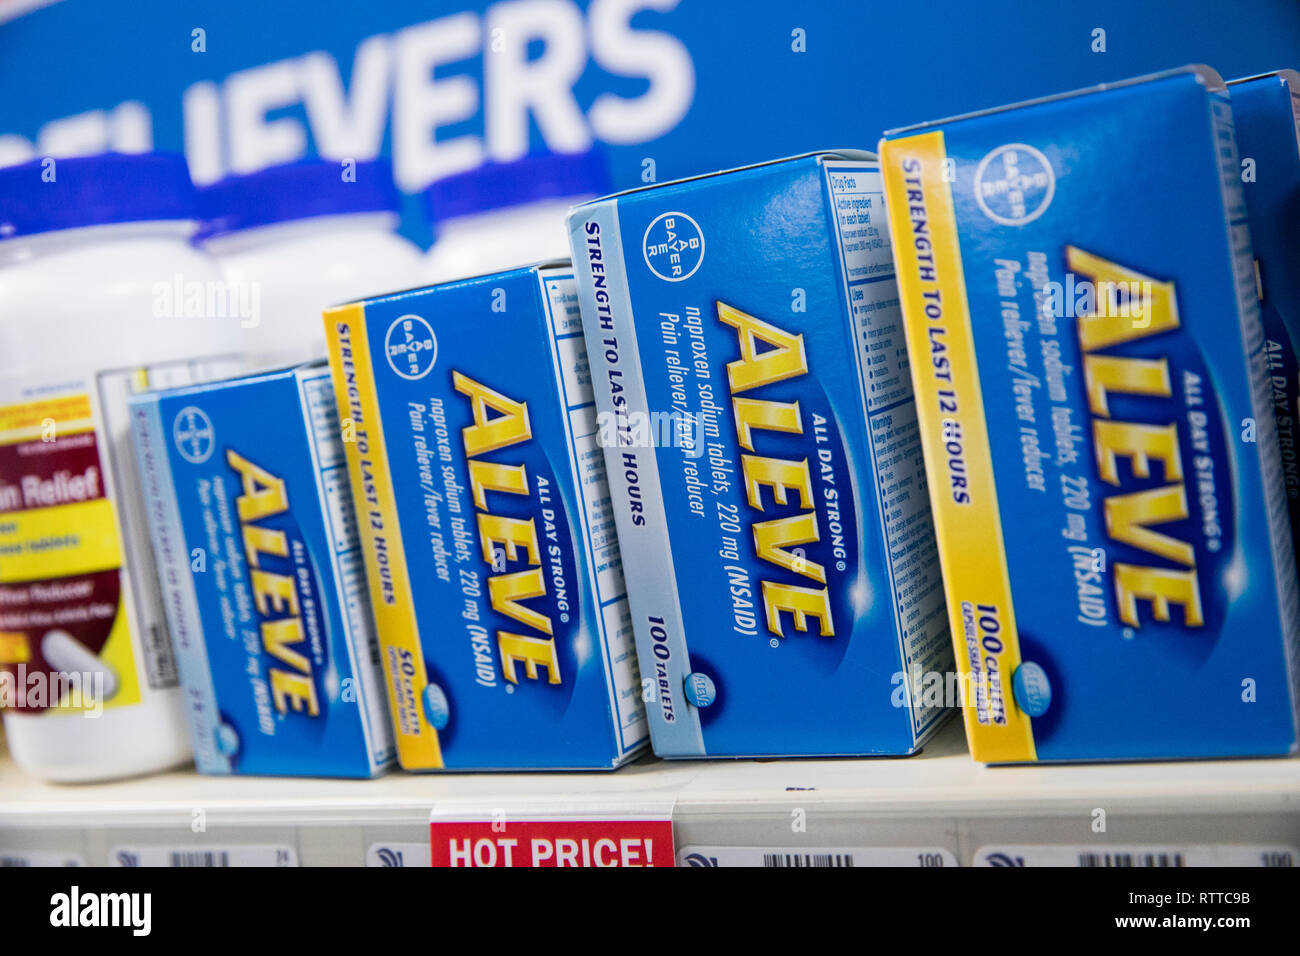 Aleve (Naproxen) over-the-counter Schmerz Medikament in der Apotheke  fotografiert Stockfotografie - Alamy